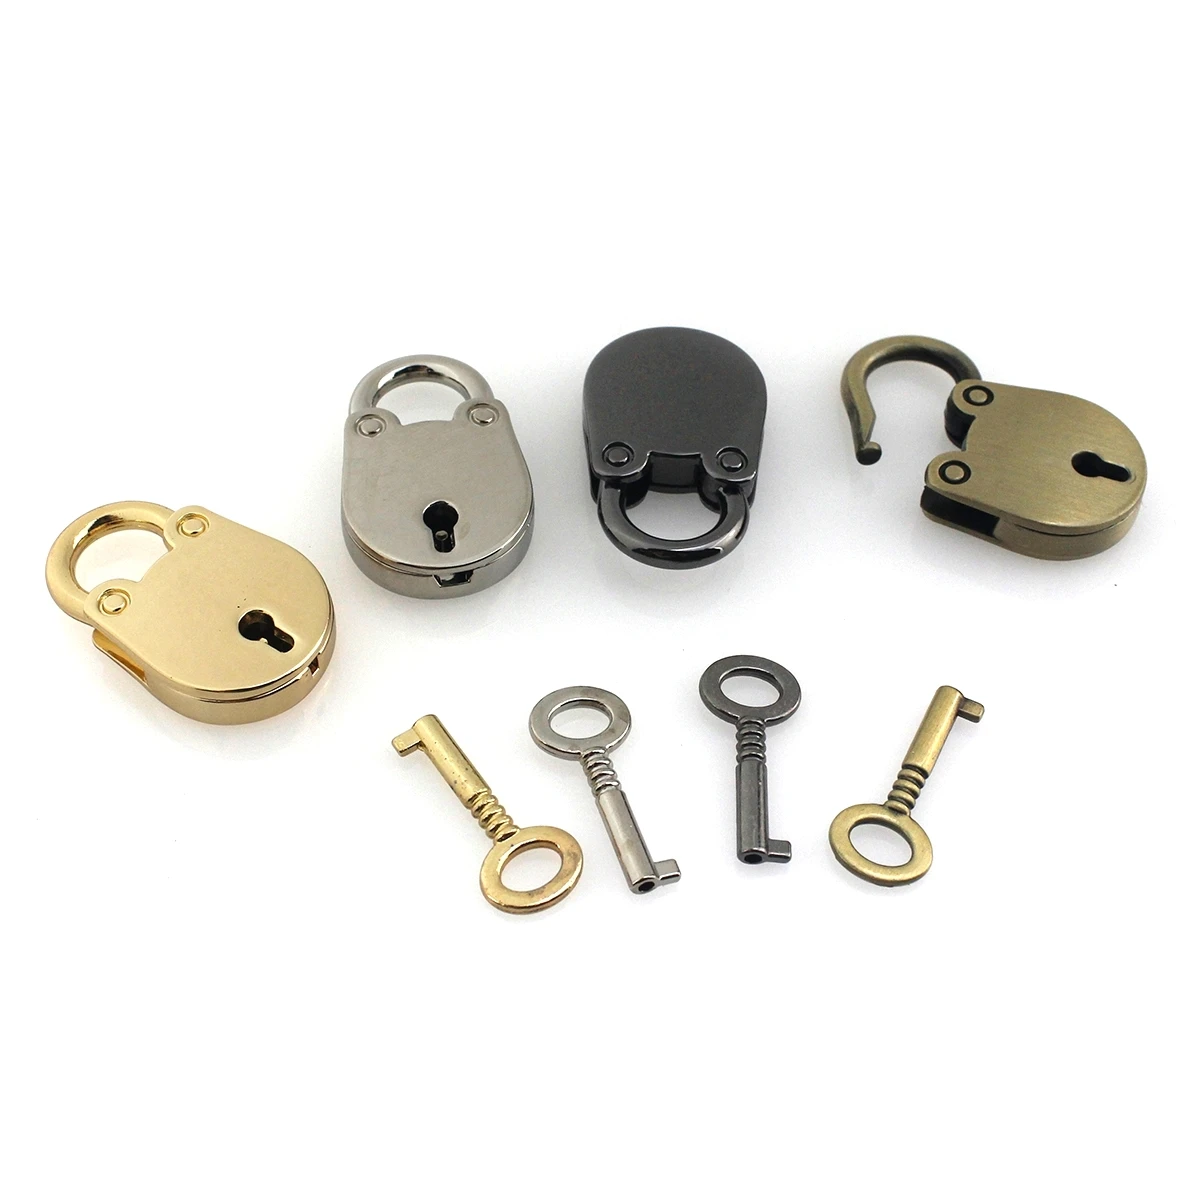 5 NEW Small Metal Padlock Mini SILVER Tiny Luggage Donation Craft Box Lock & Key 